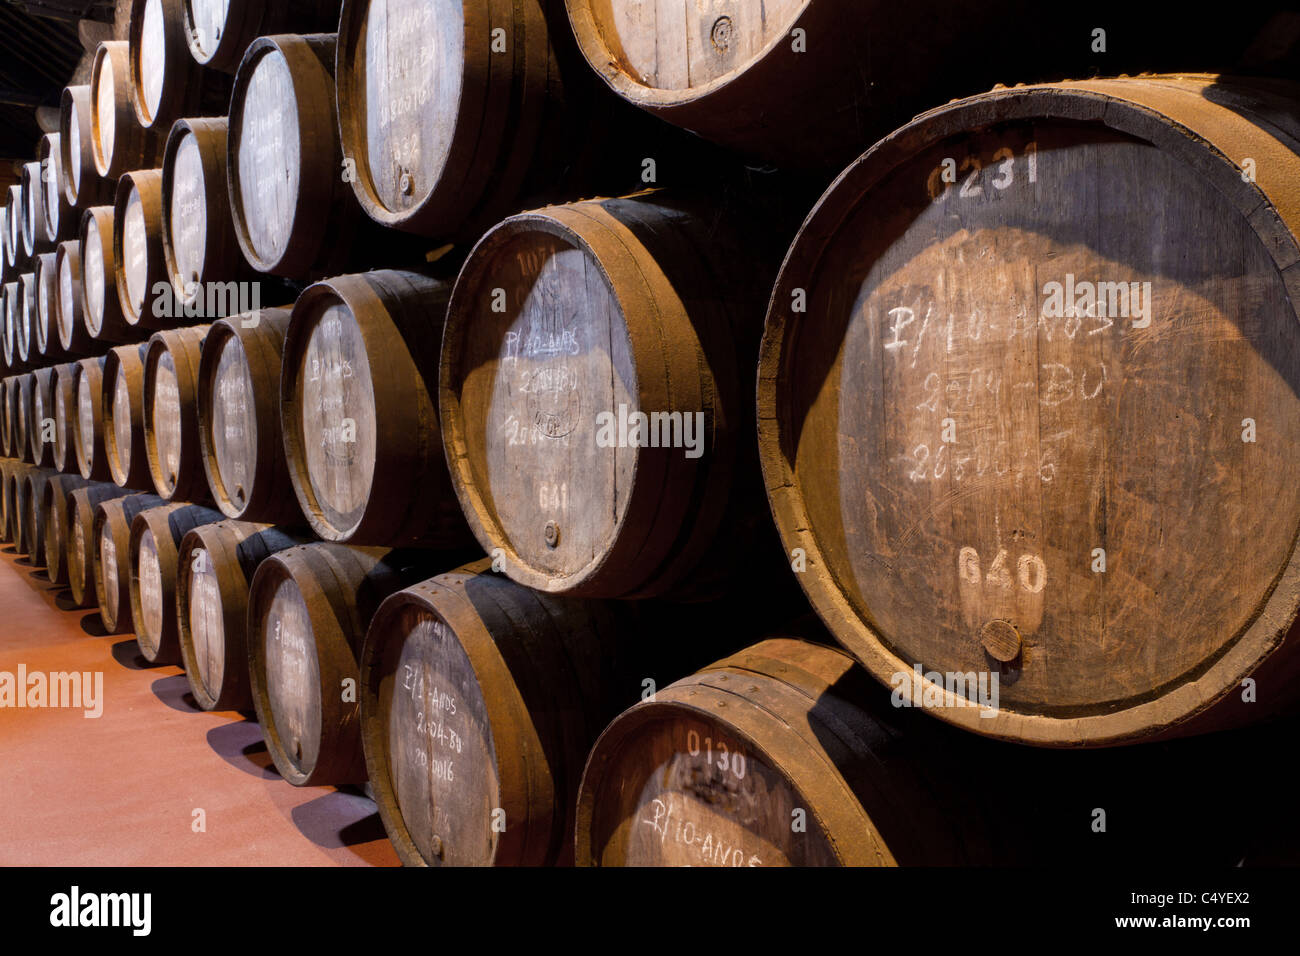 wooden barrels hold Port fortified wine to mature in wine cellars in Villa Nova de Gaia, Portugal Stock Photo